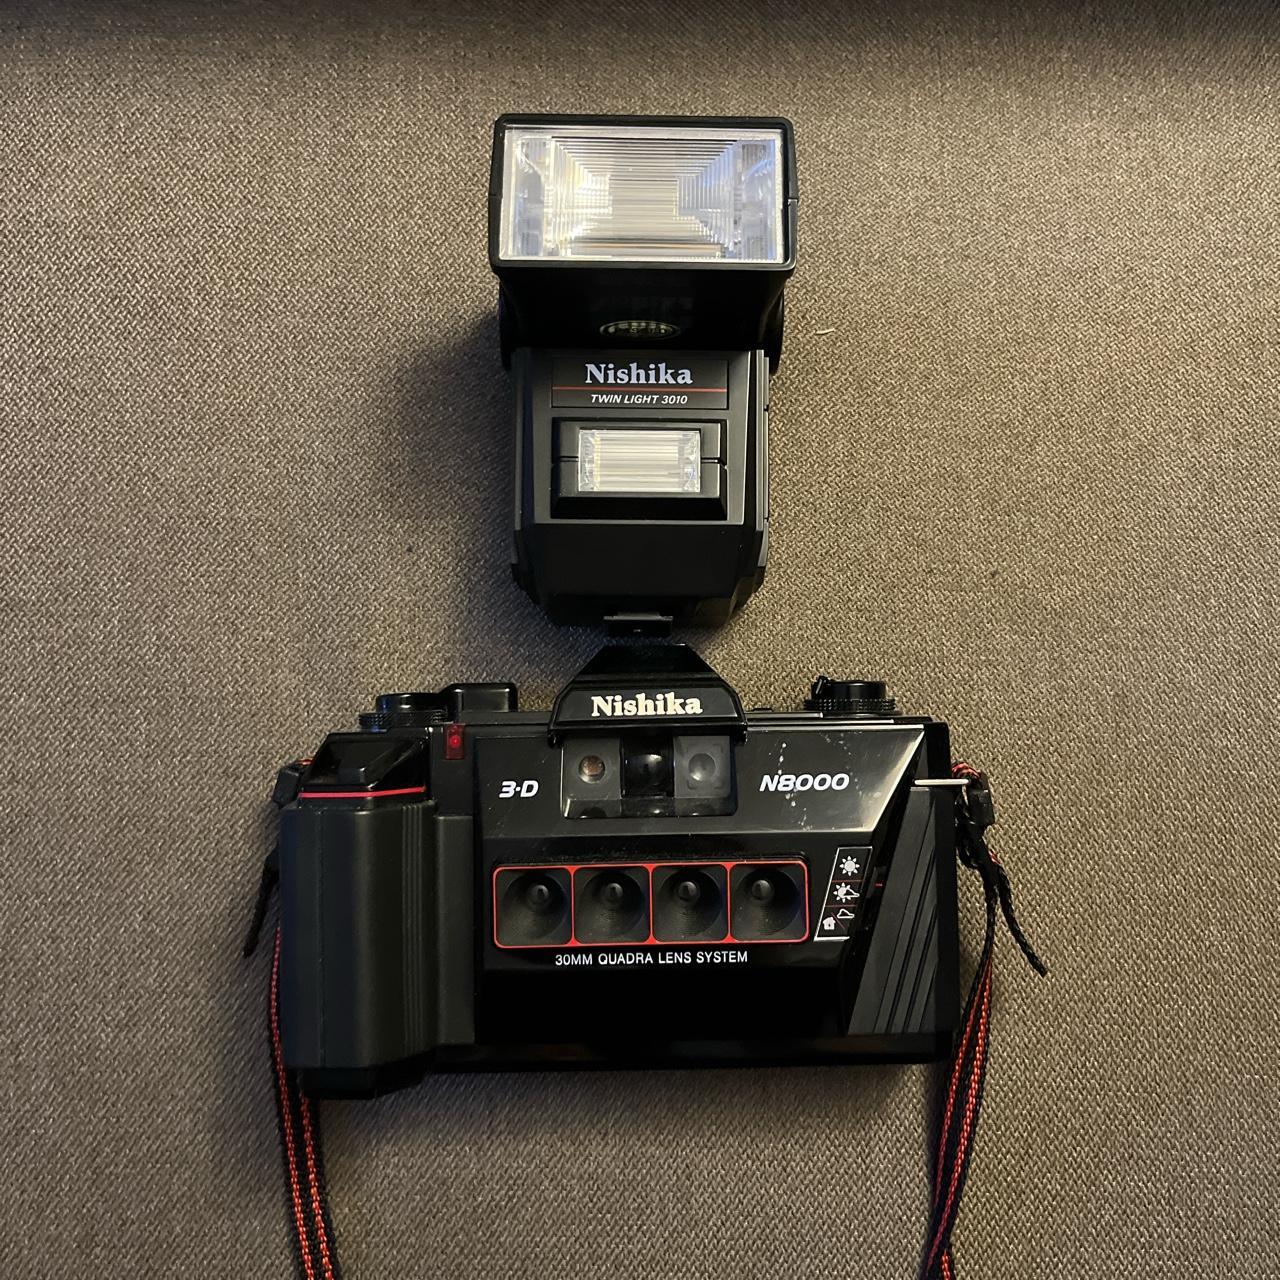 Product Image 1 - FREE SHIPPING

Nishika N8000

Film Camera 

3-D